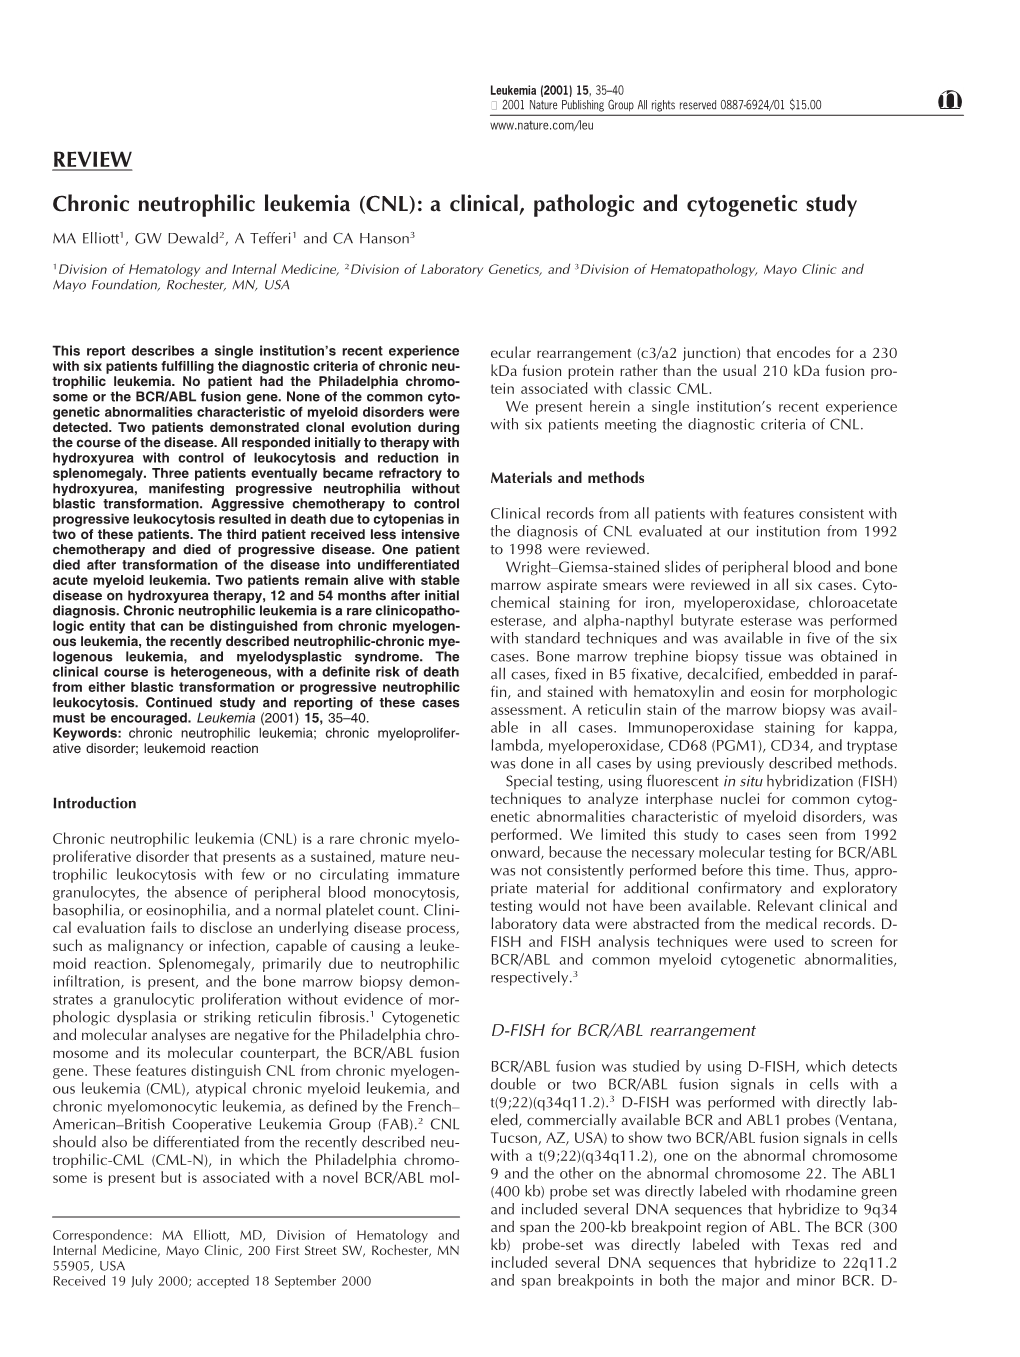 REVIEW Chronic Neutrophilic Leukemia (CNL): a Clinical, Pathologic and Cytogenetic Study